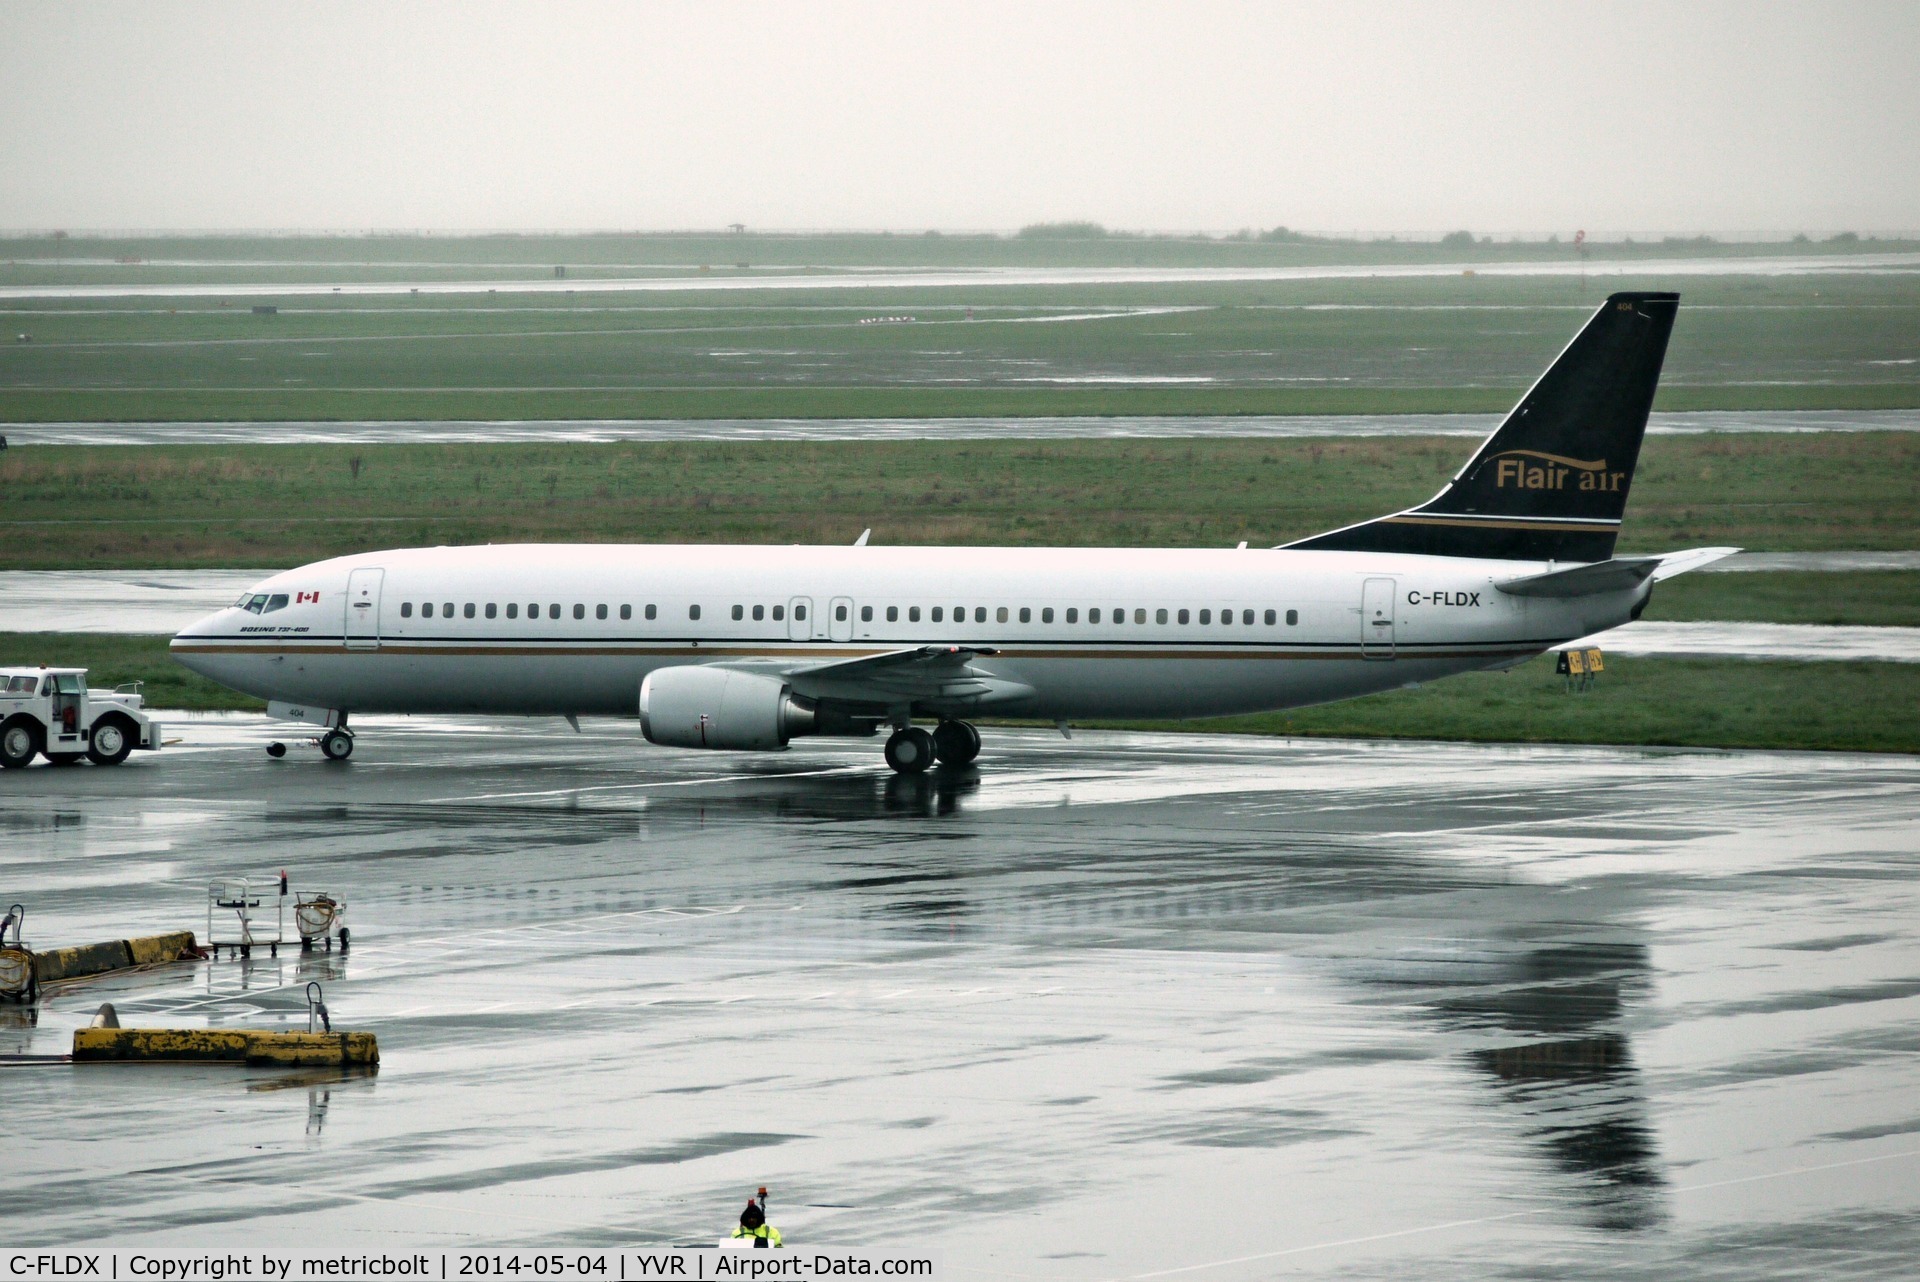 C-FLDX, 1990 Boeing 737-408 C/N 24804, pushback for departure